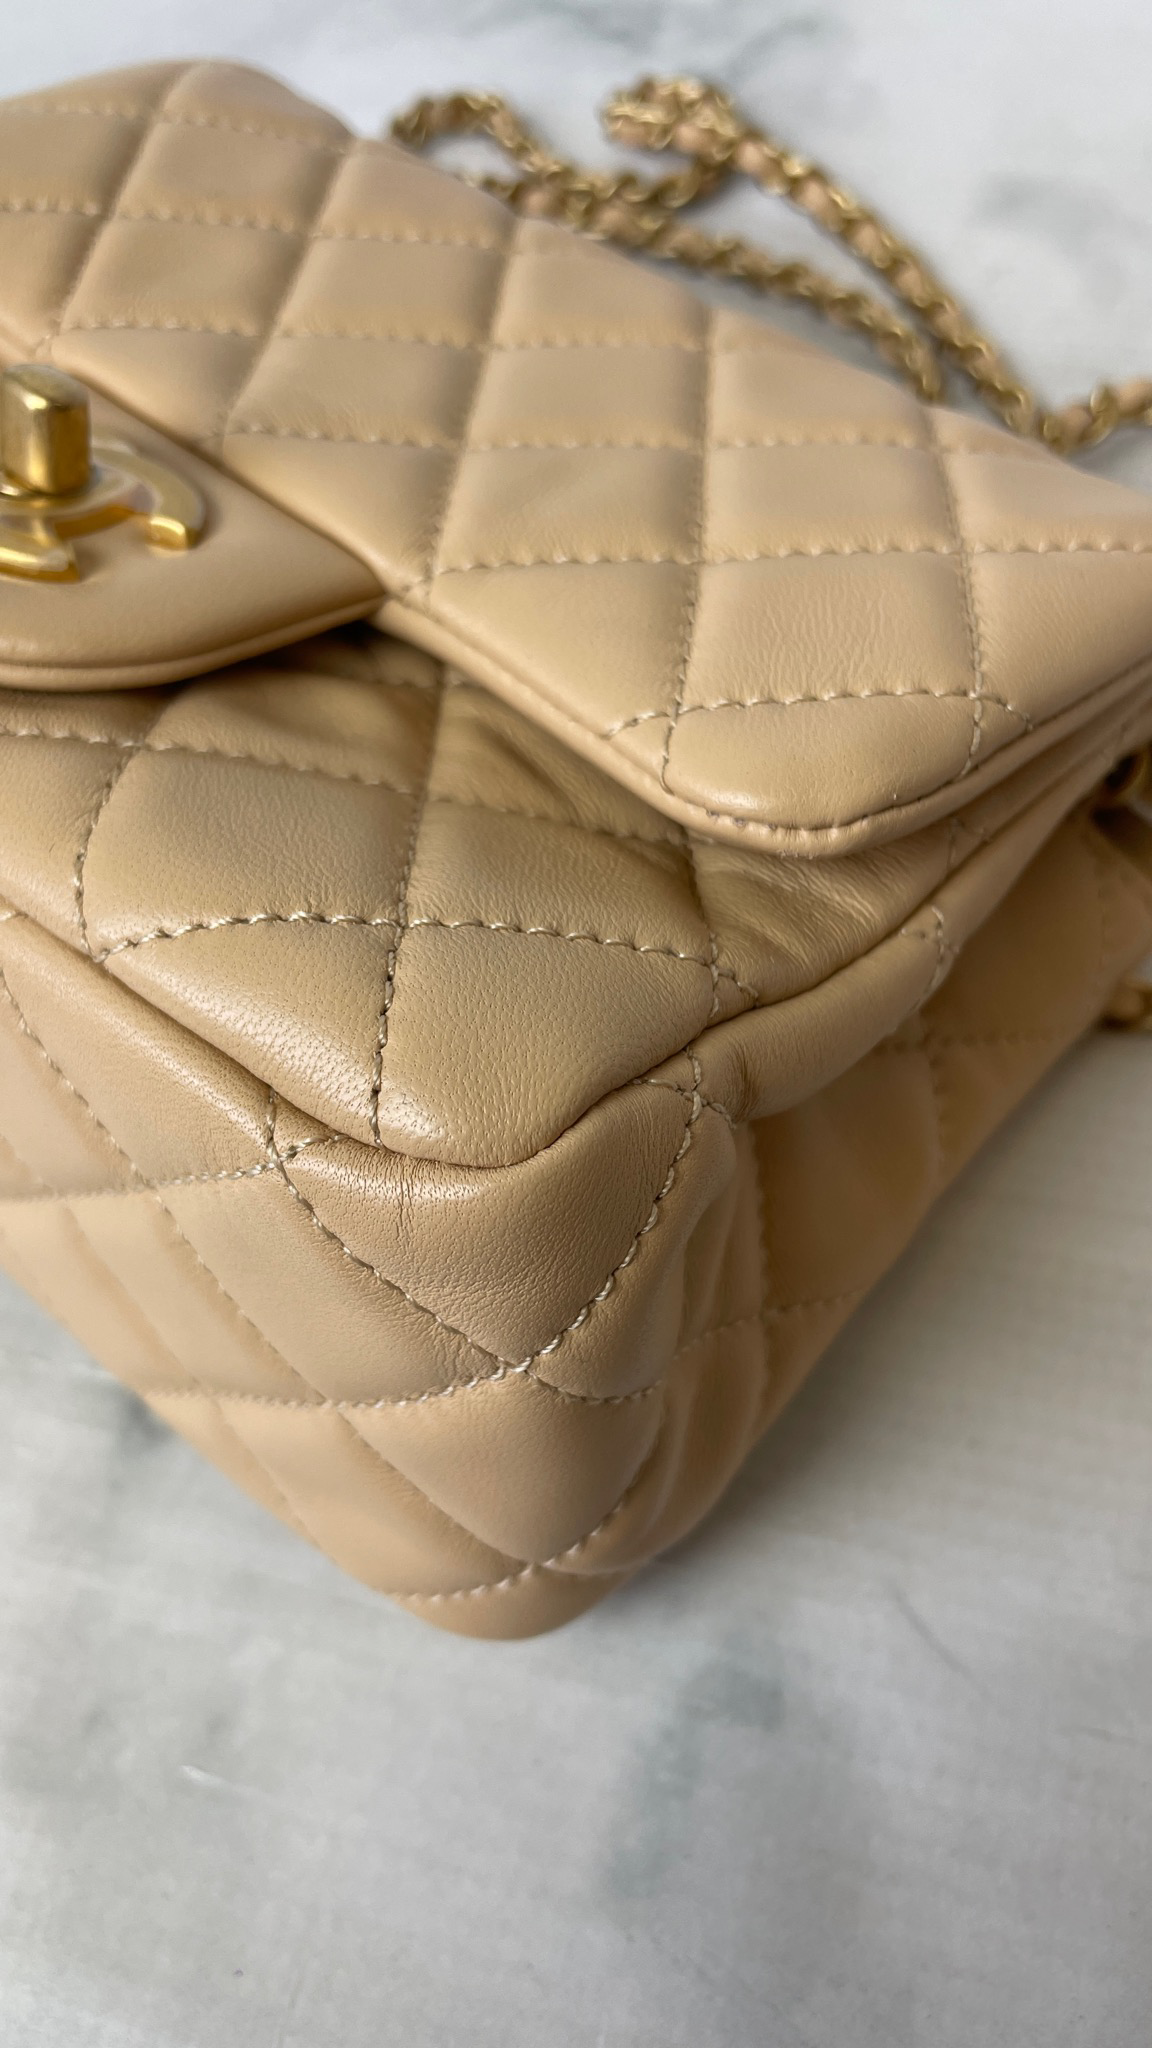 chanel pearl bag mini leather